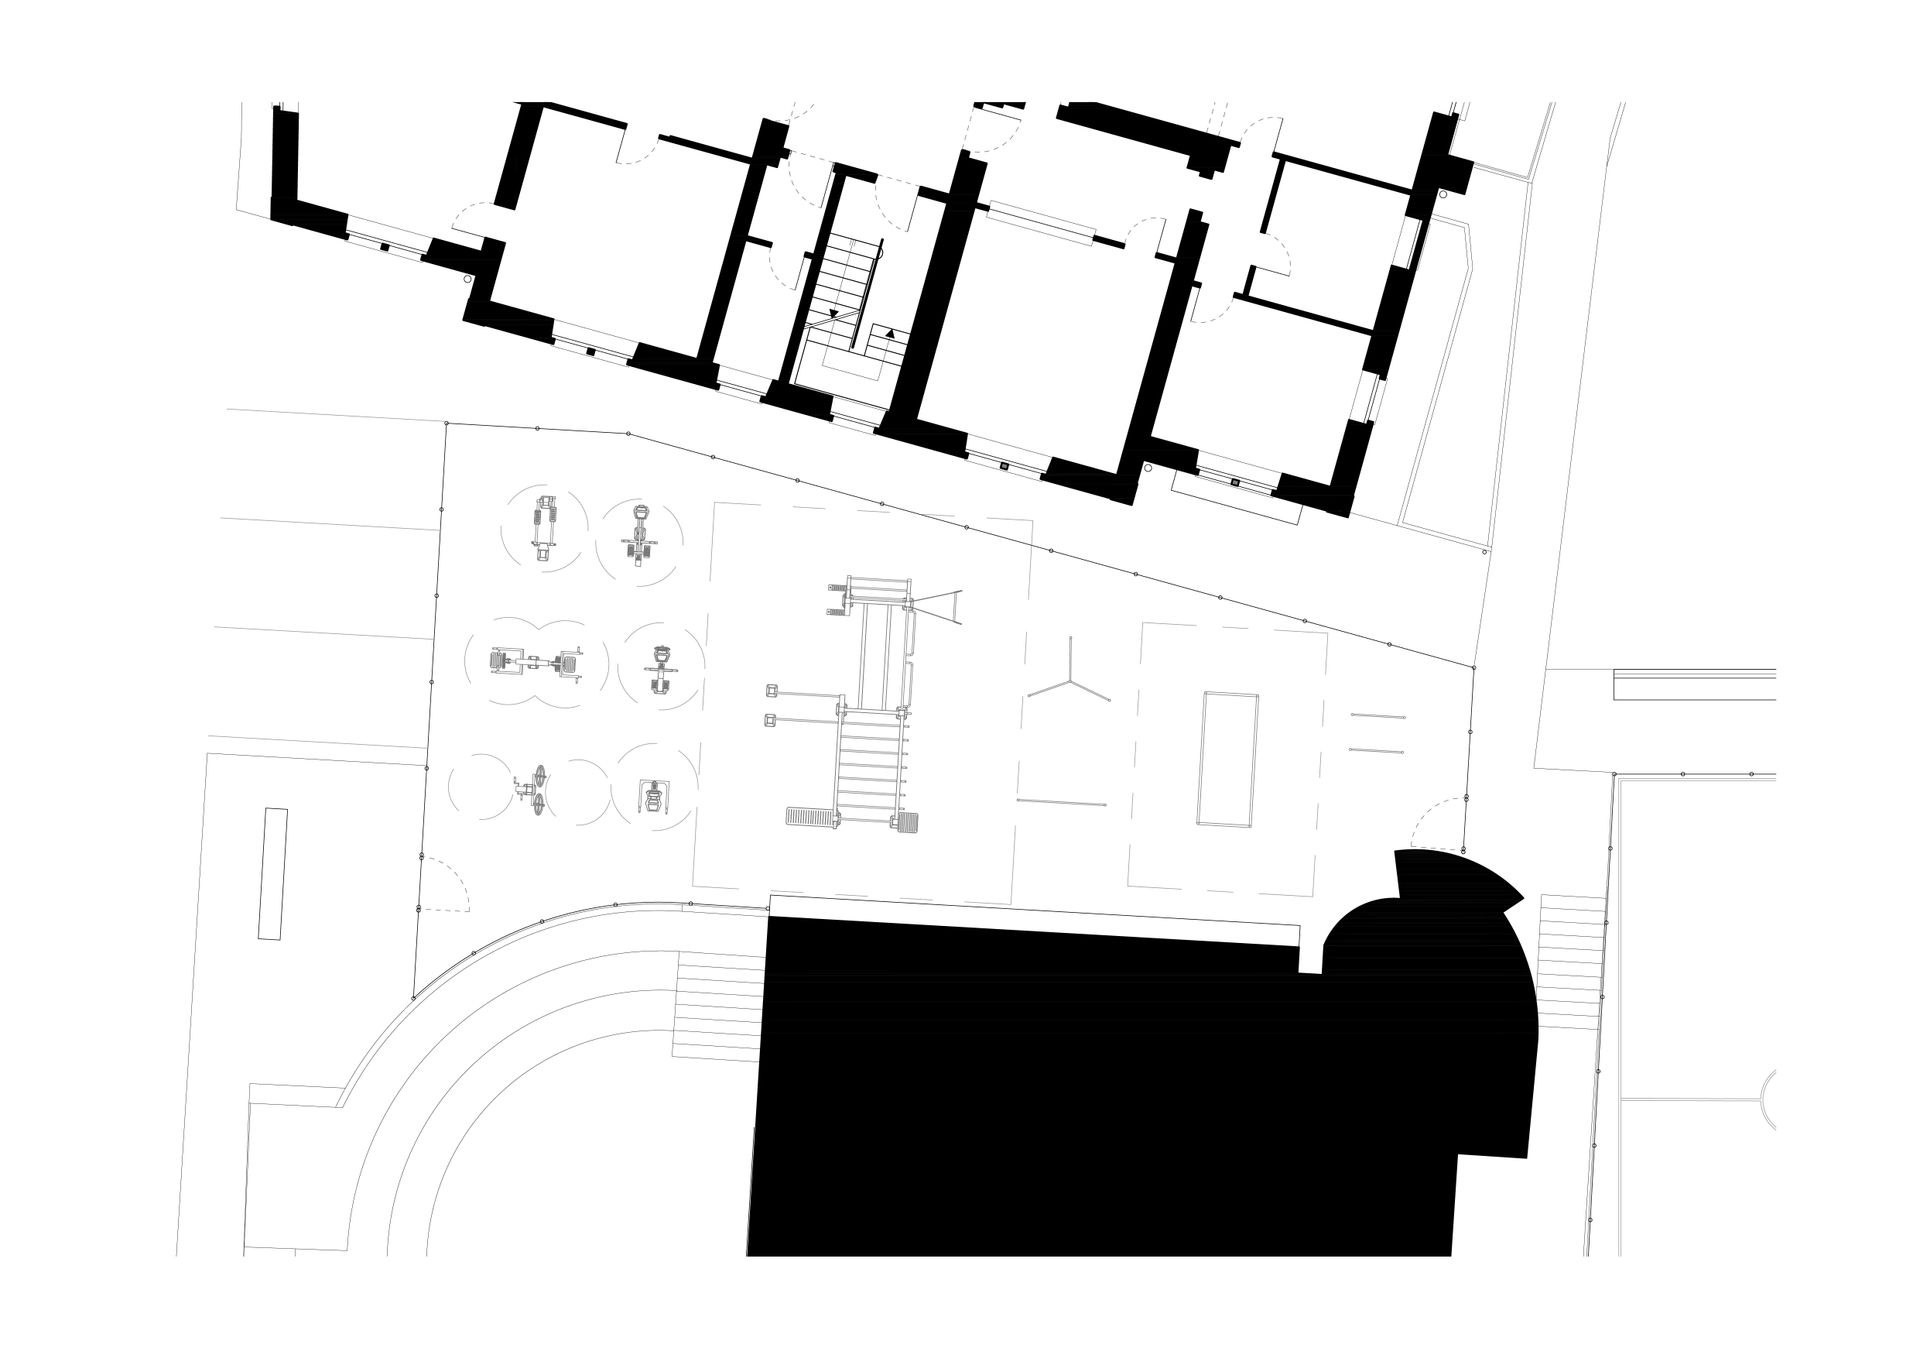 urban park project, Gazzaniga, Bergamo, Milan, London, New York, Paris, Berlin. designer Claudio Acquaviva, architect Debora Bordogni, Officina Magisafi architecture design - floor plan